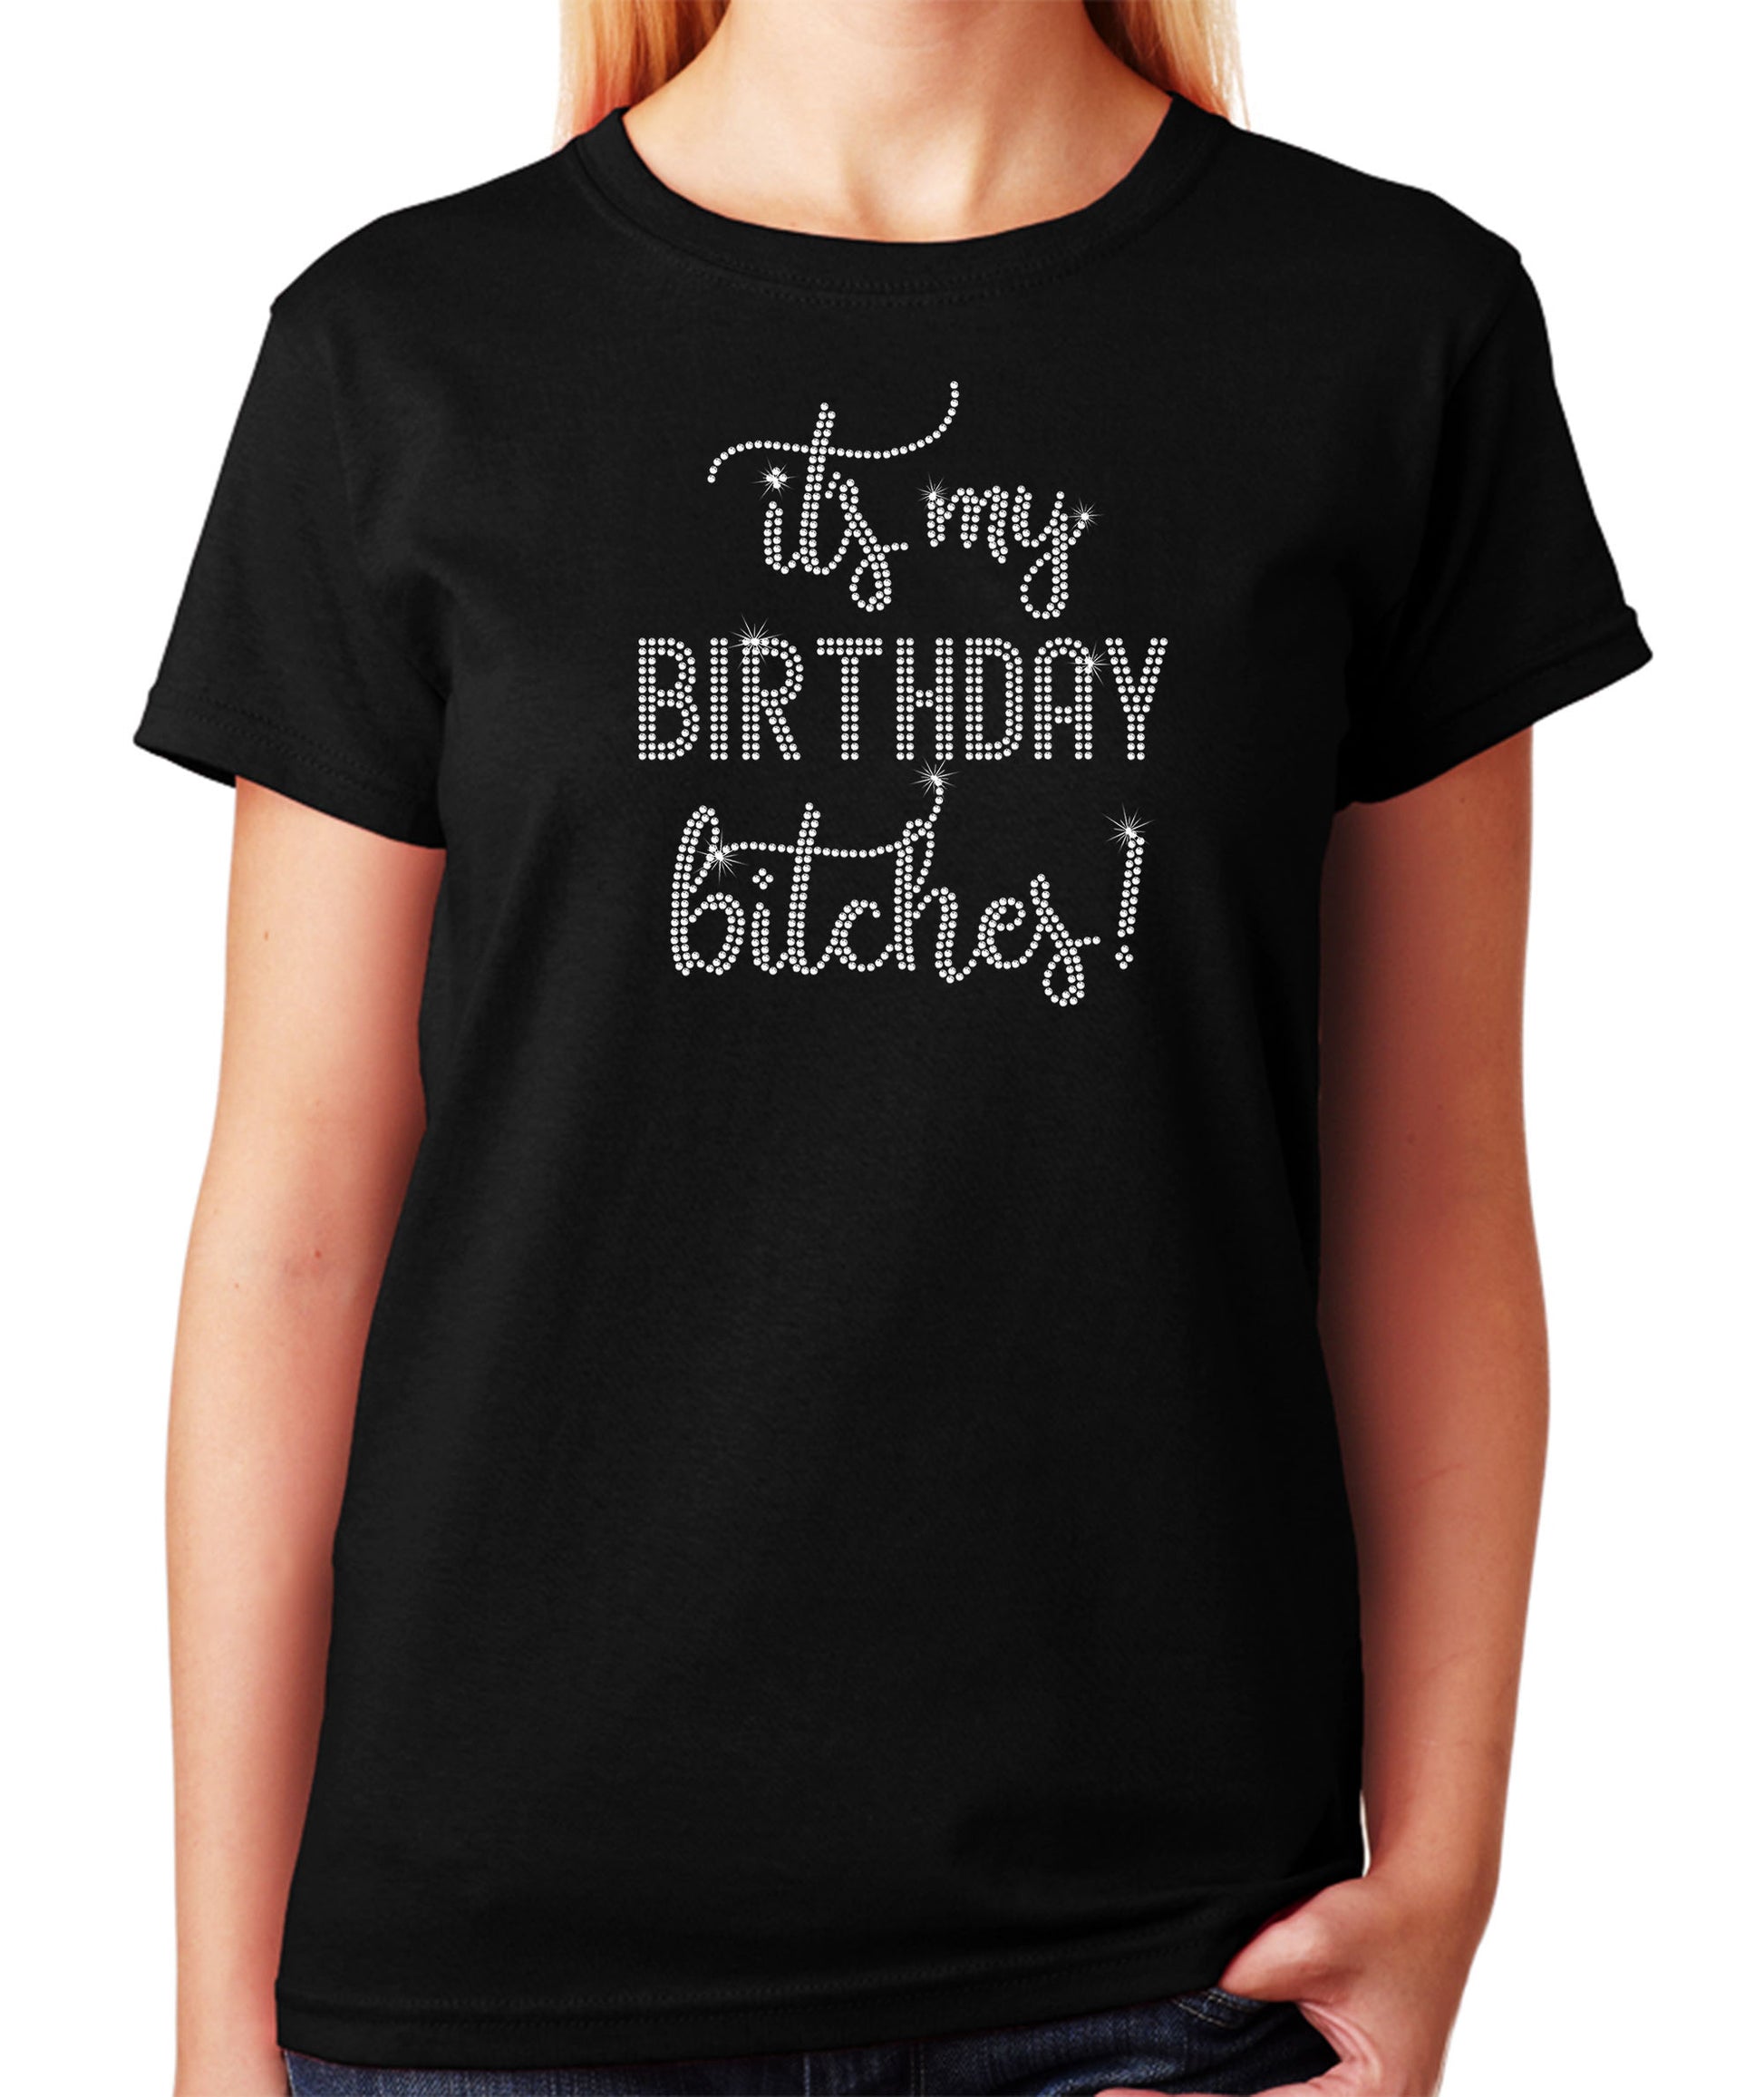 It's My Birthday Bitches - Birthday Shirt, Script Birthday Shirt